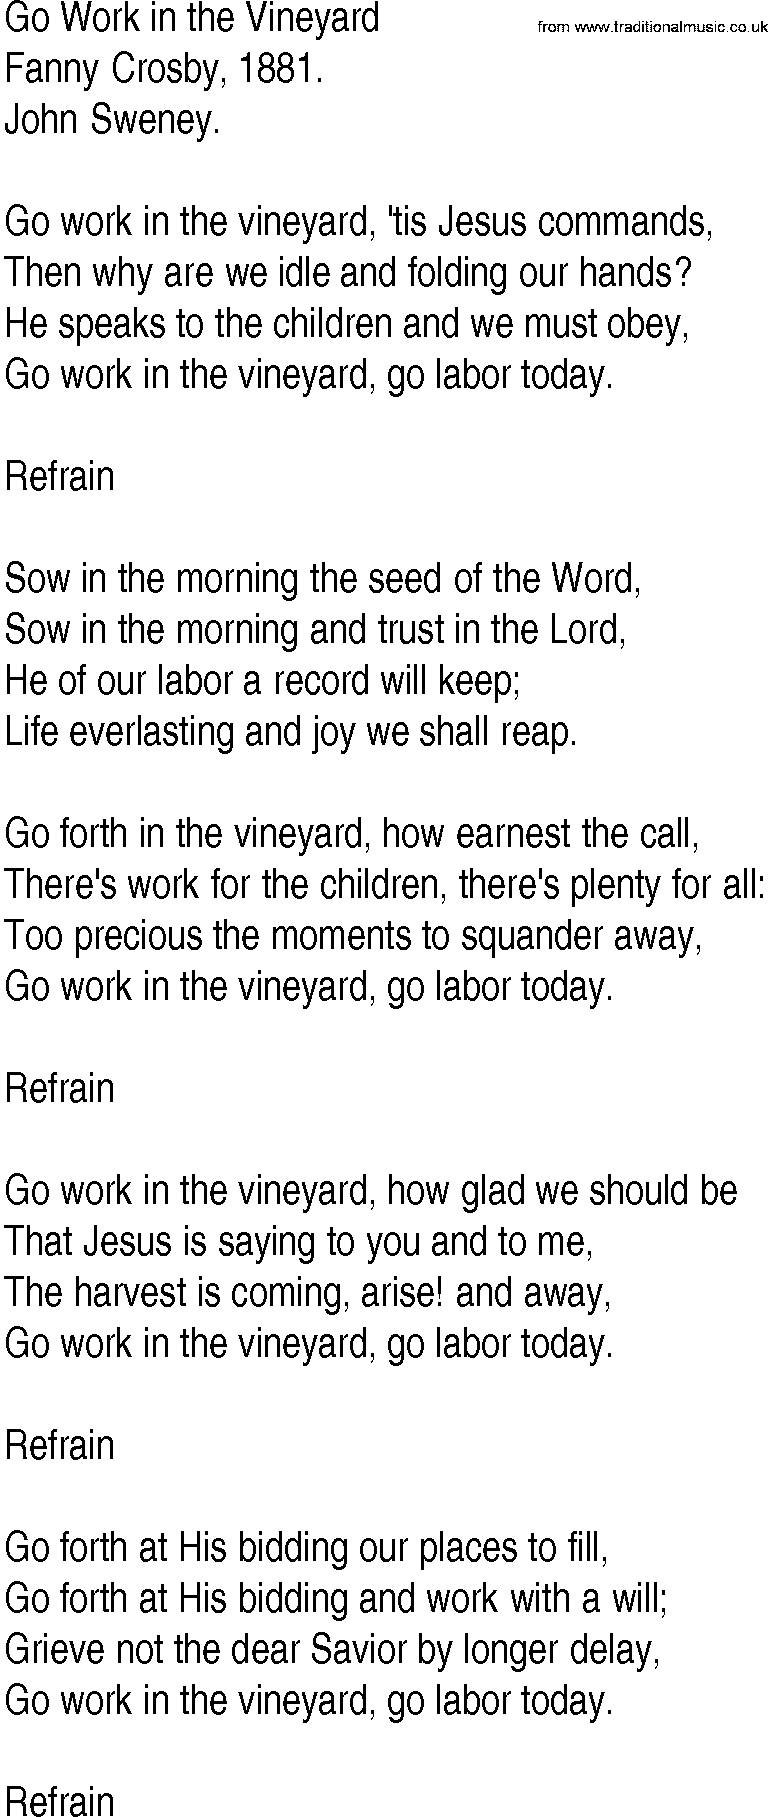 Hymn and Gospel Song: Go Work in the Vineyard by Fanny Crosby lyrics